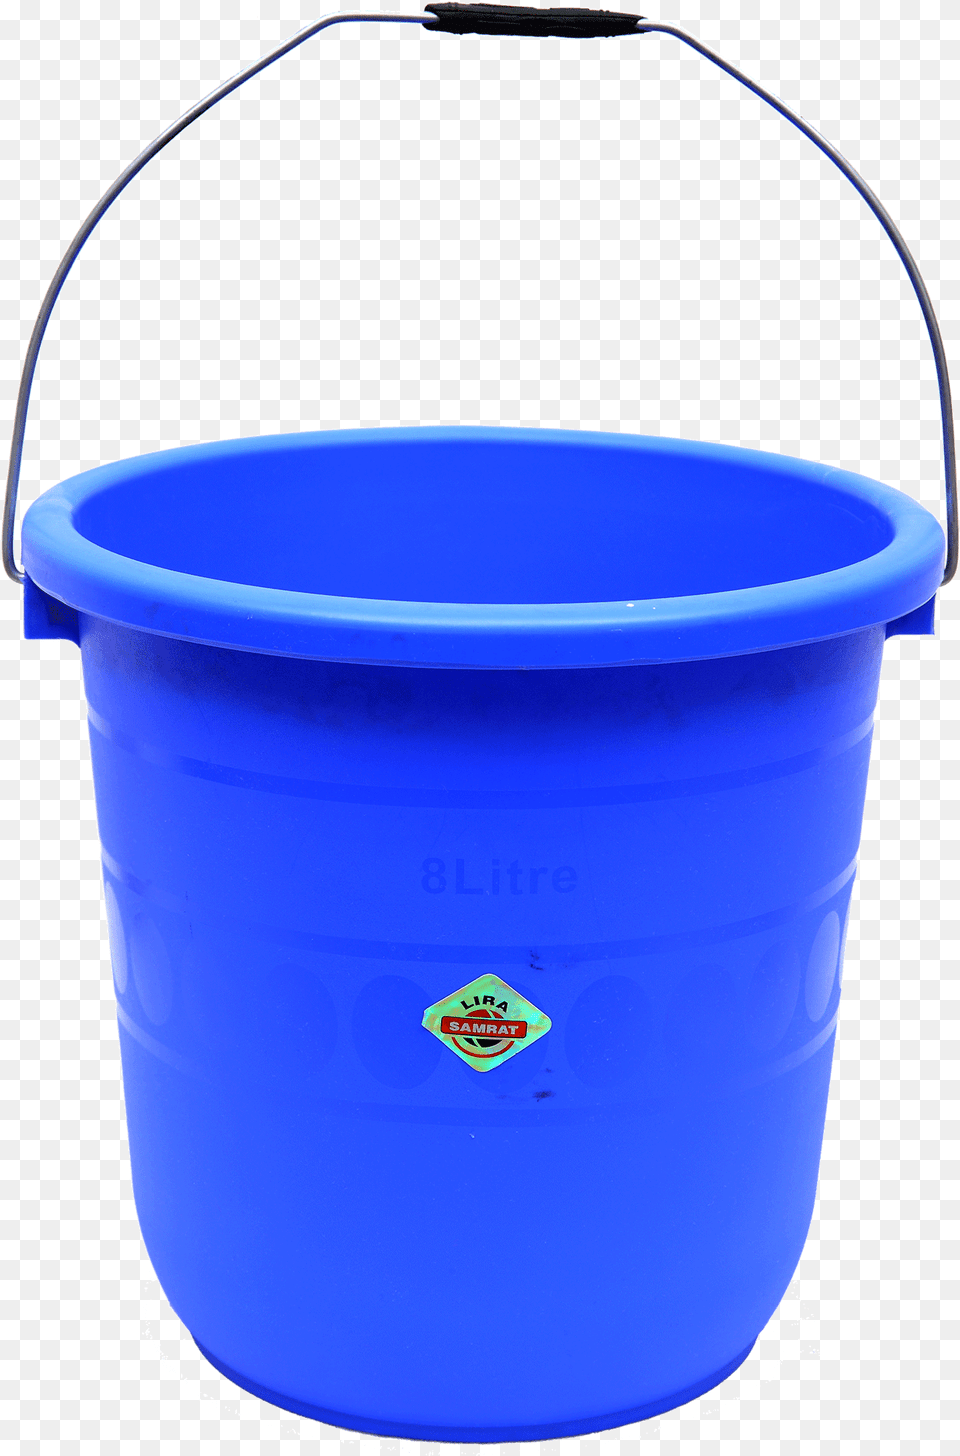 Plastic Bucket Image Plastic Bucket, Bottle, Shaker Free Png Download